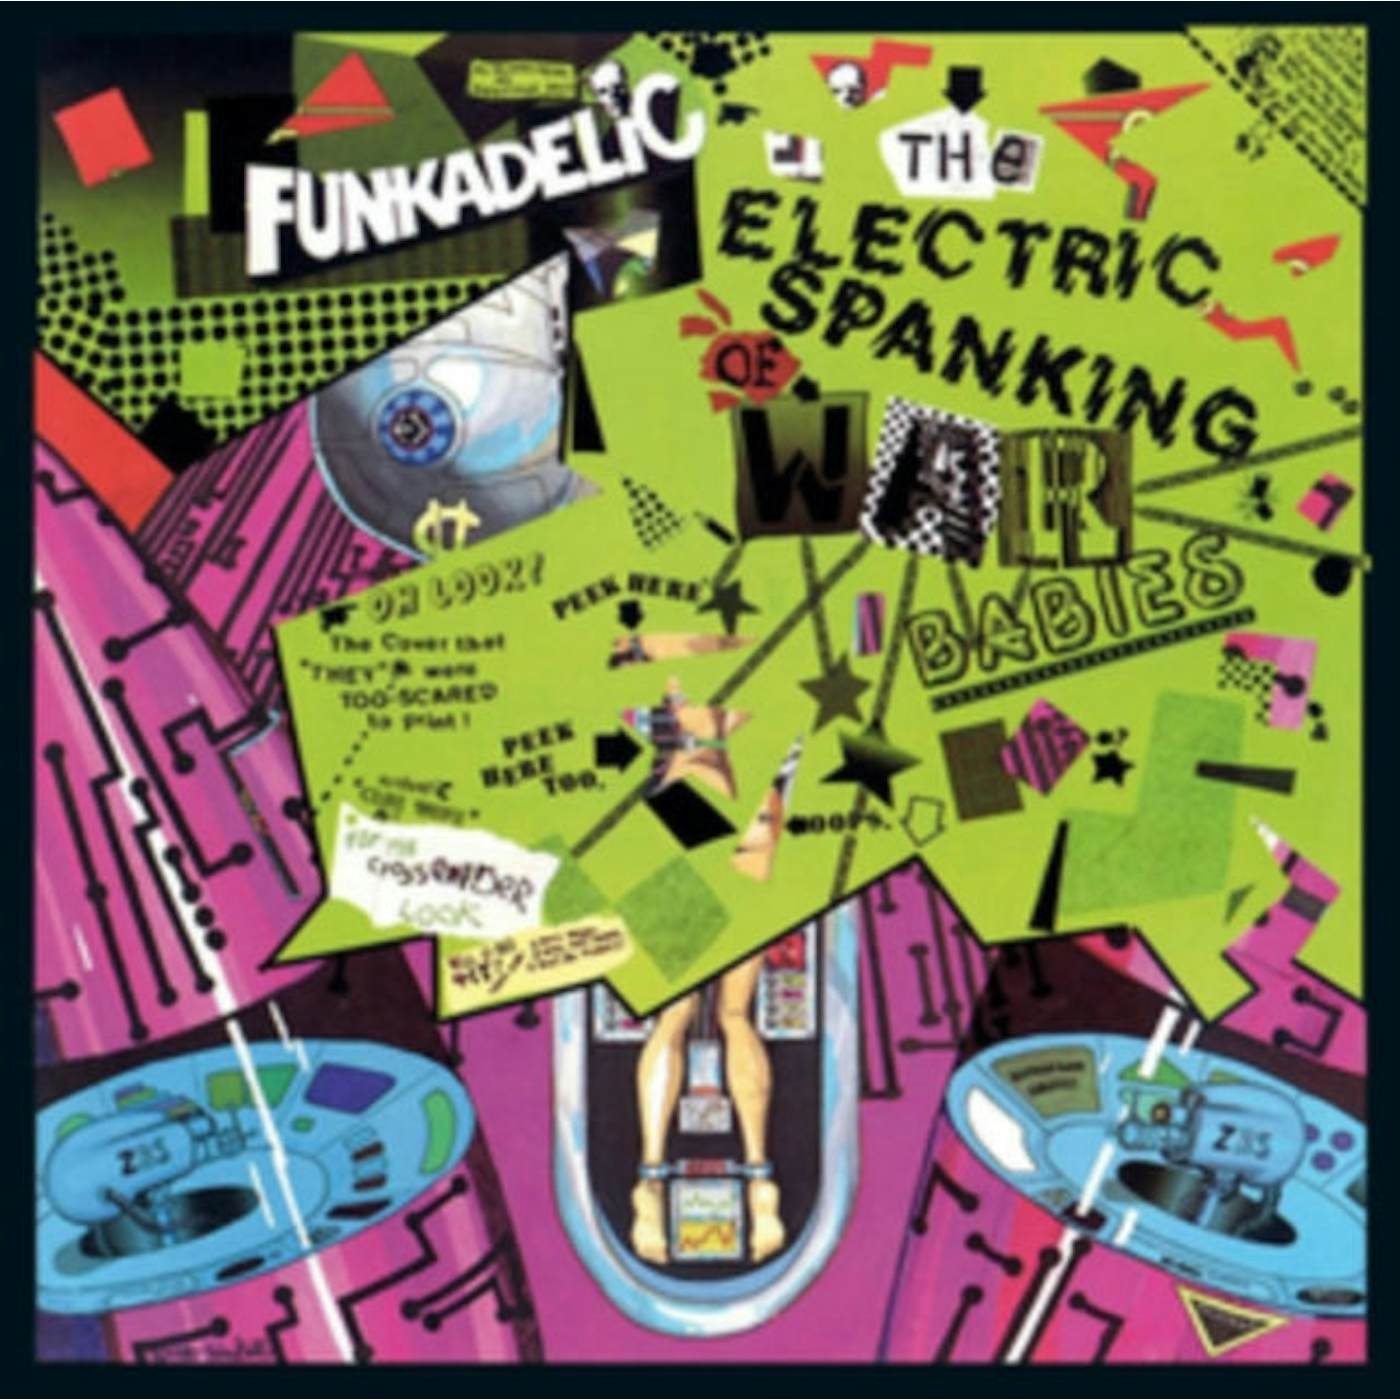 Funkadelic LP Vinyl Record - The Electric Spanking Of War Babies (Green Fluorescent Vinyl)